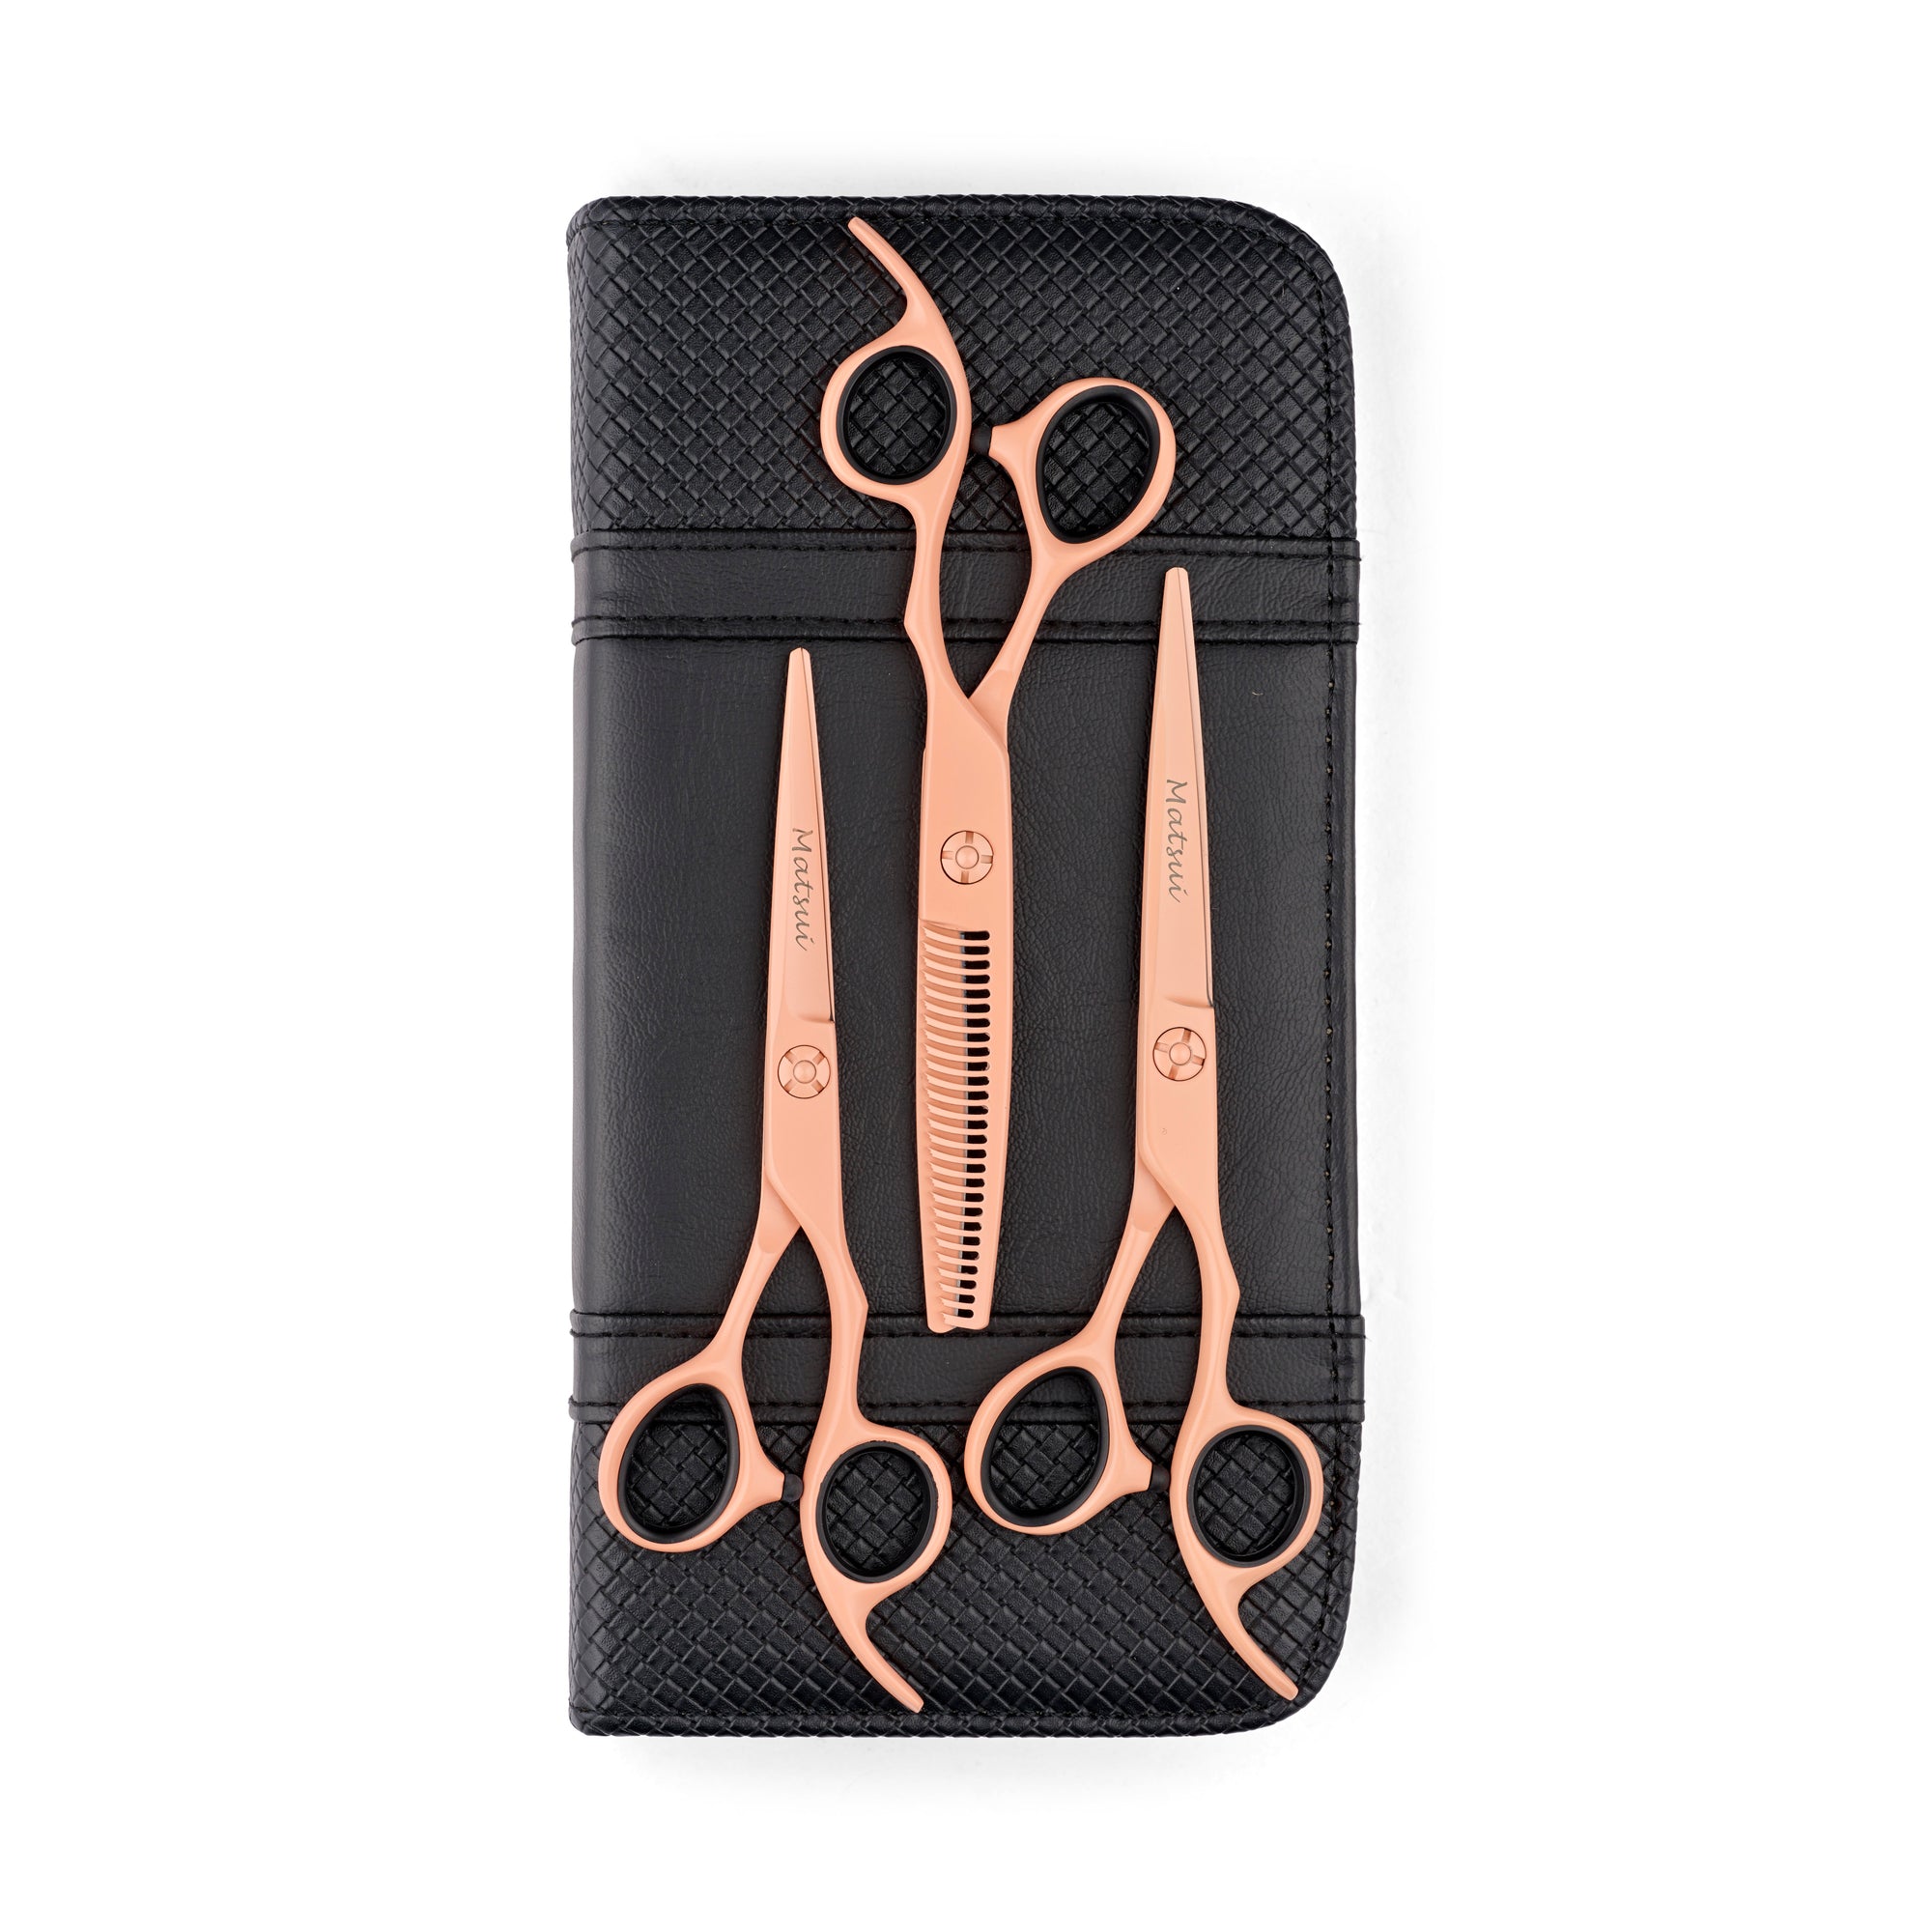 Matsui Pastel Peach Hair Scissors Triple Set (6623023530045)